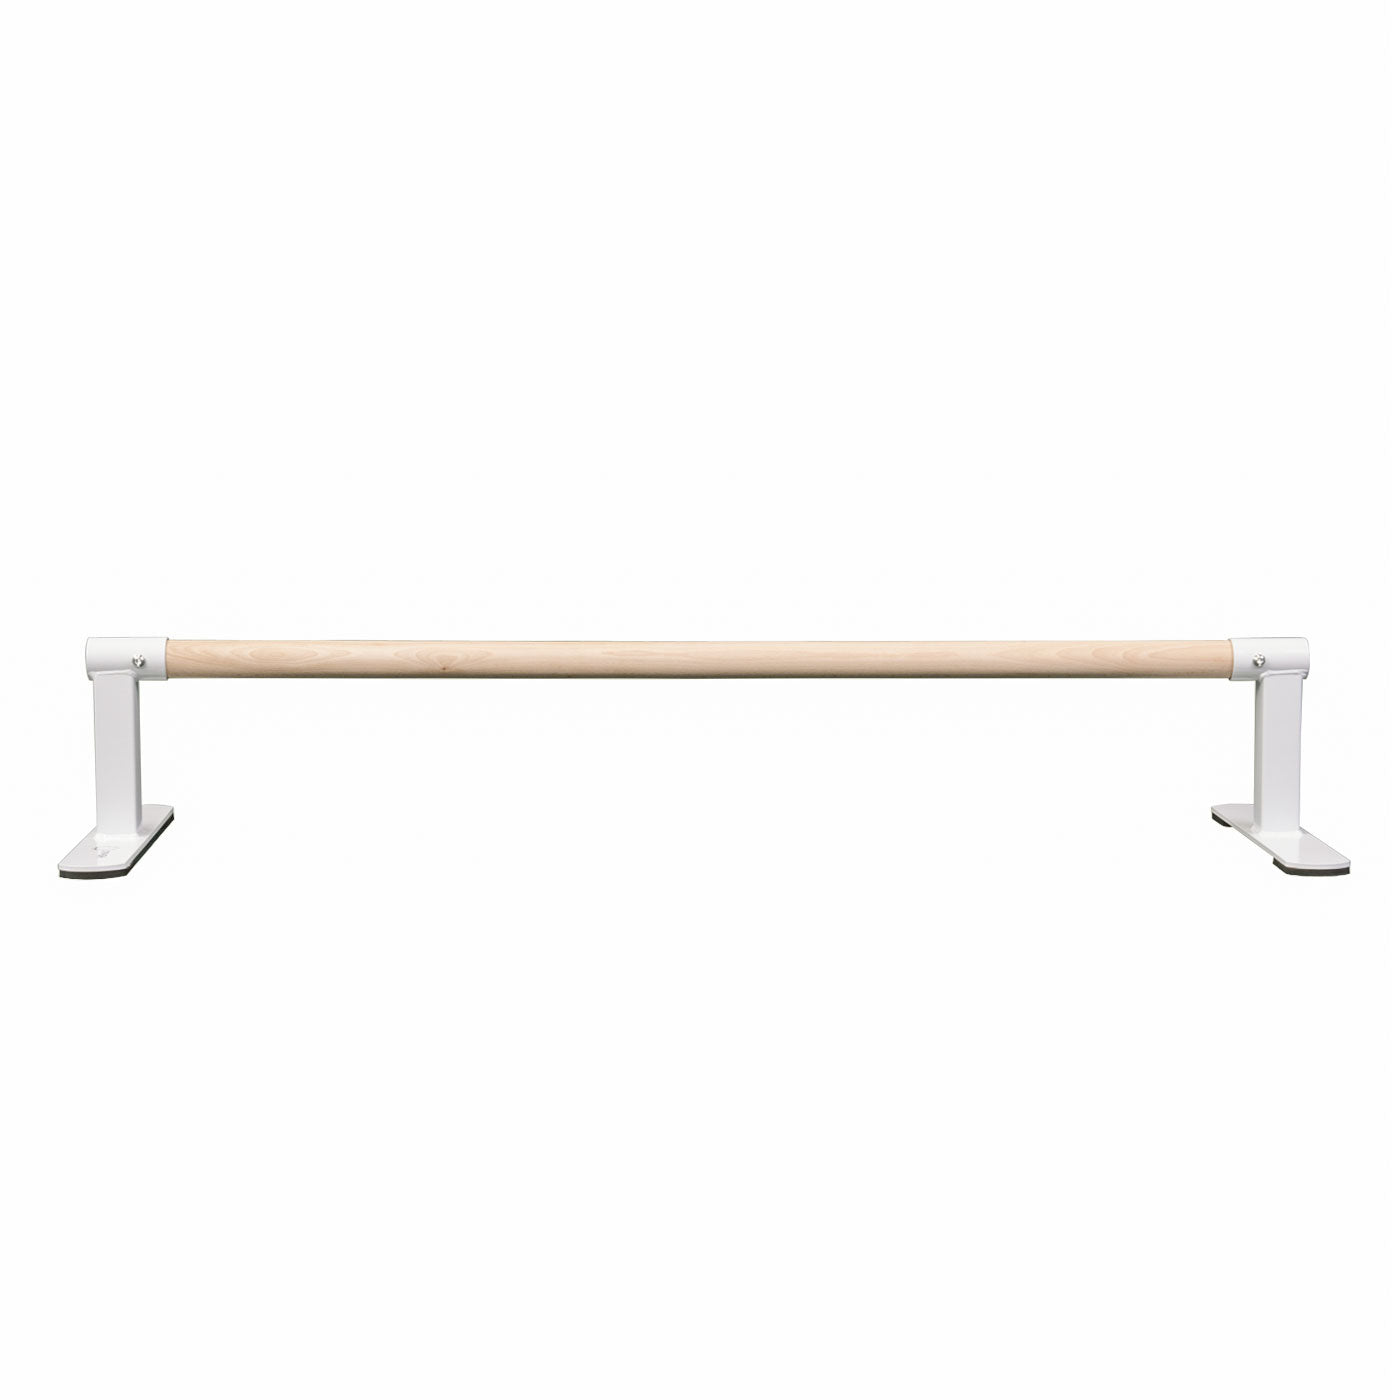 MEMAX Gymnastics Handstand Floor Bar Pirouette Bar 120cm Length